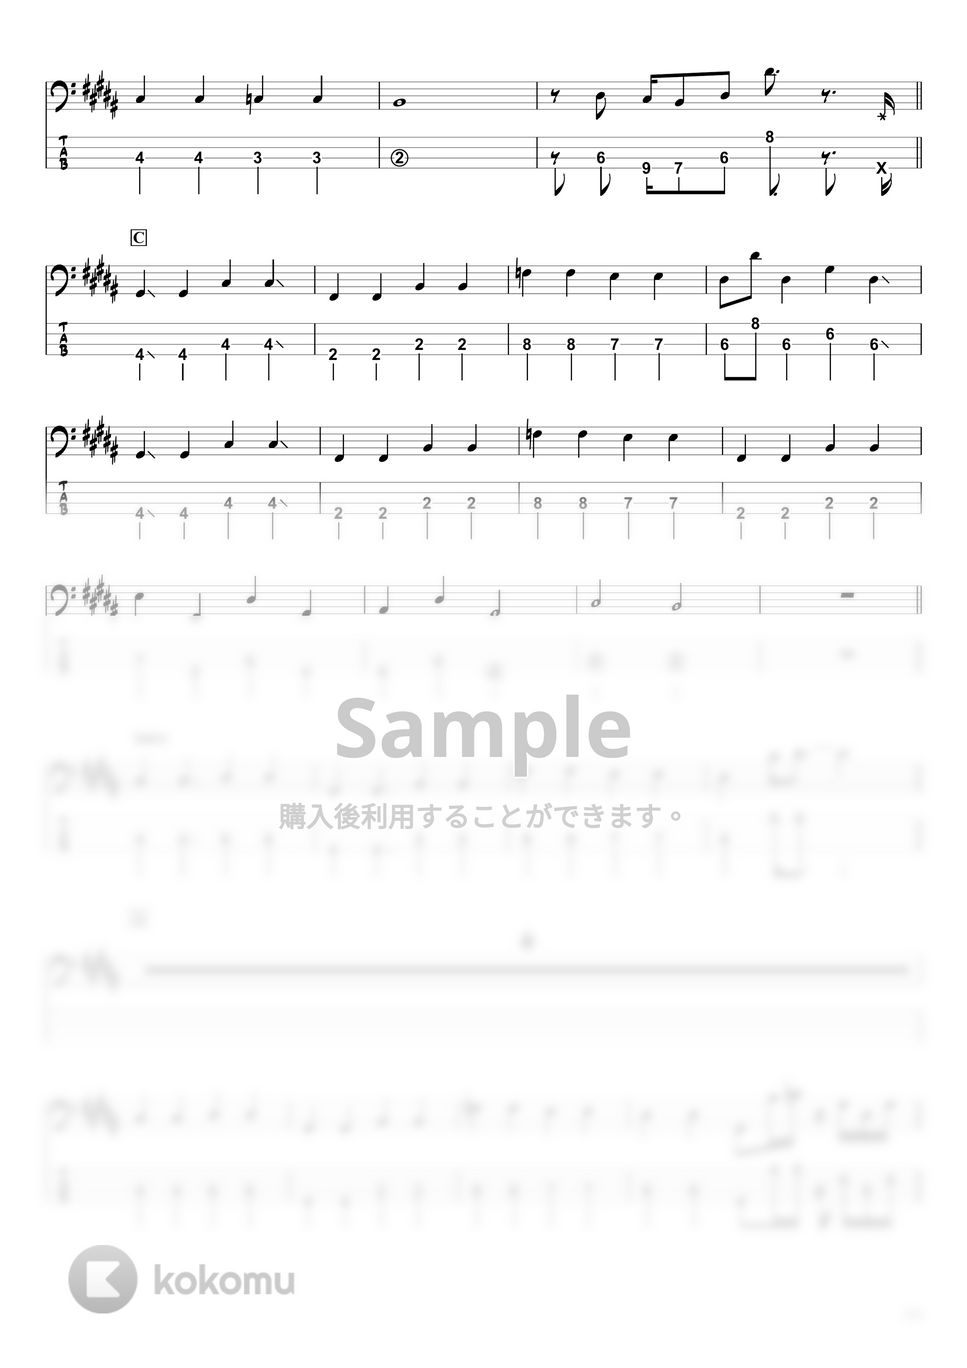 米津玄師 - 感電 (『ベースTAB譜』) by swbass